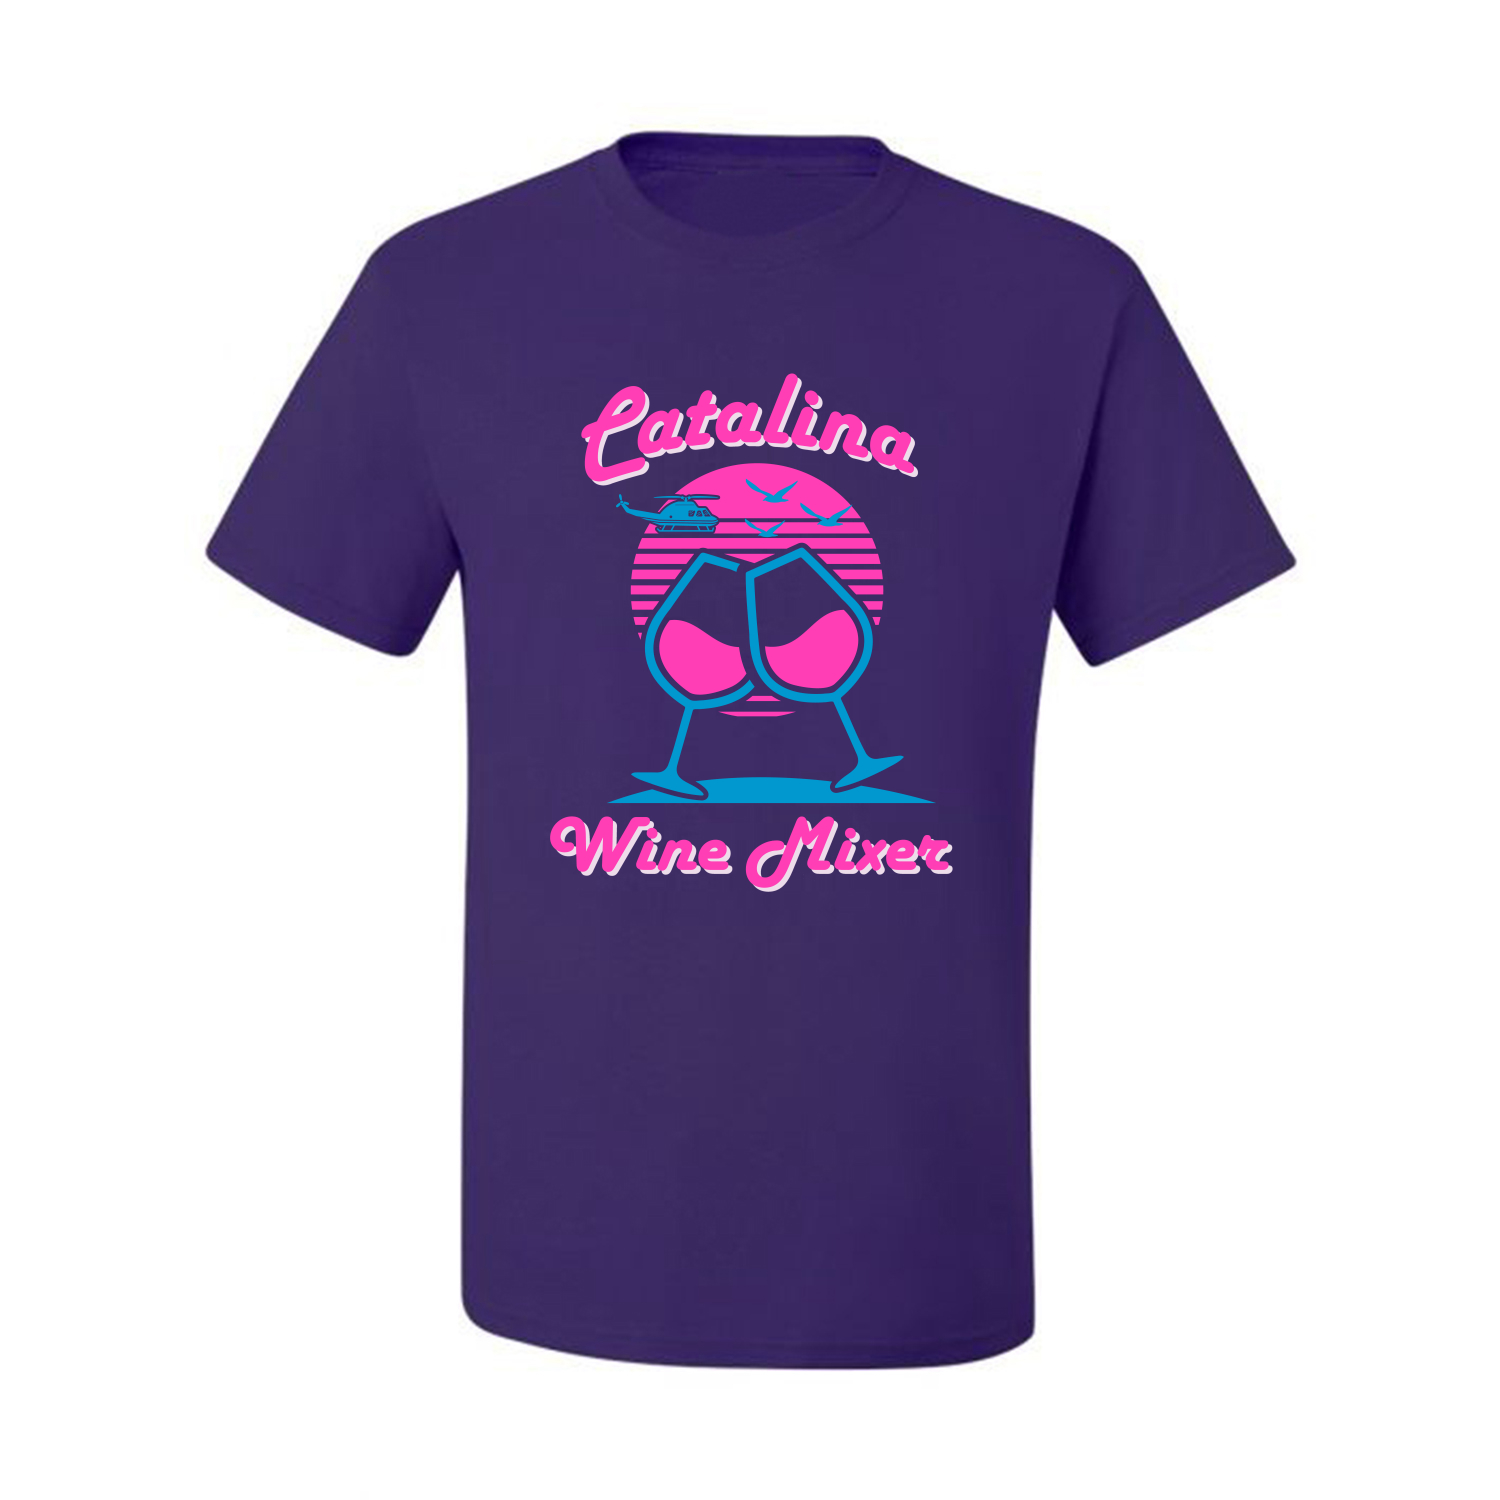 Catalina Wine Mixer Island Prestige Movie| Mens Pop Culture Graphic T-Shirt, Purple, Small - image 2 of 4